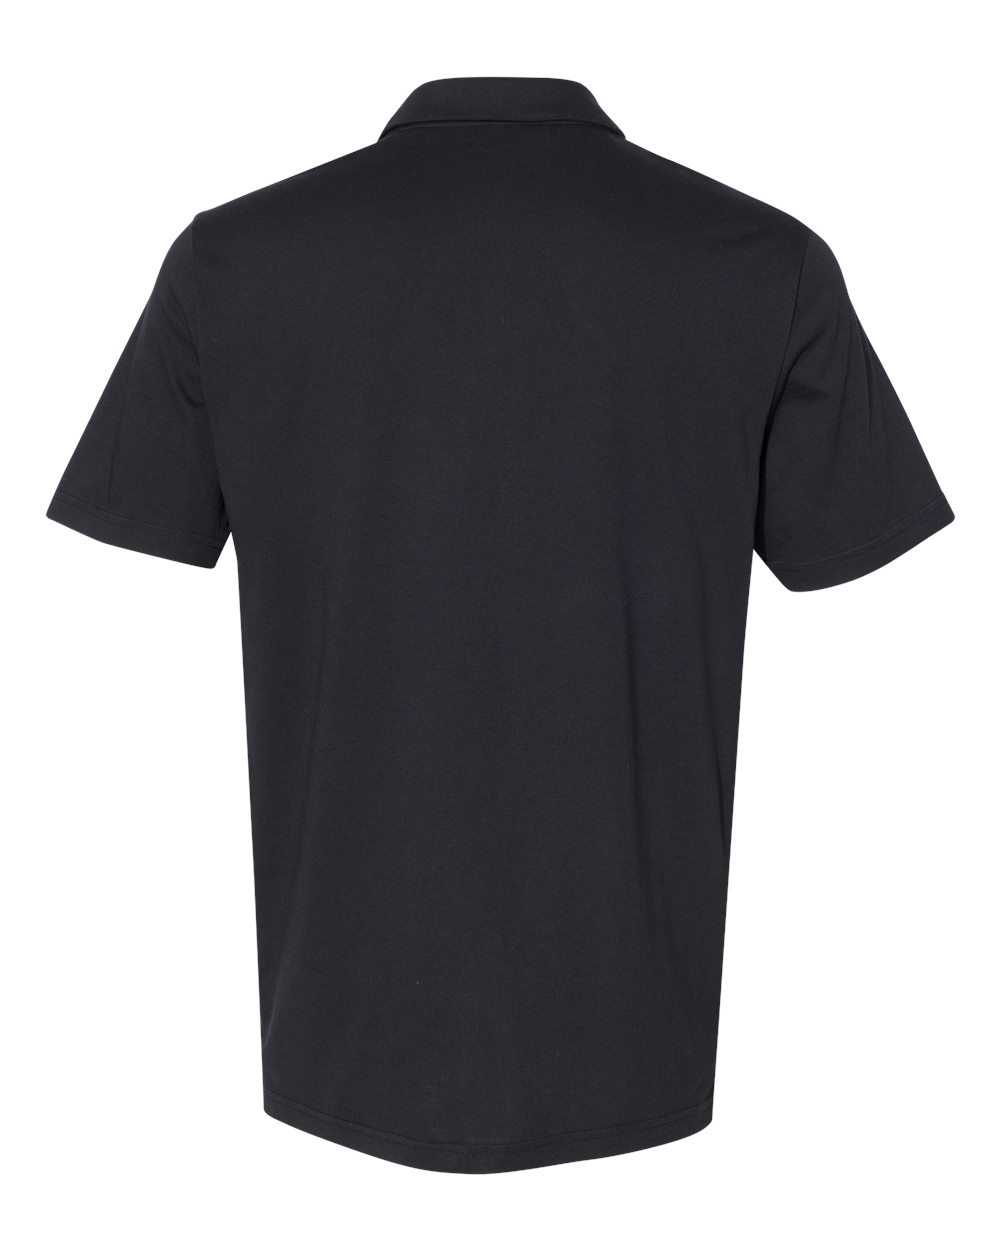 Adidas A322 Cotton Blend Sport Shirt - Black - HIT a Double